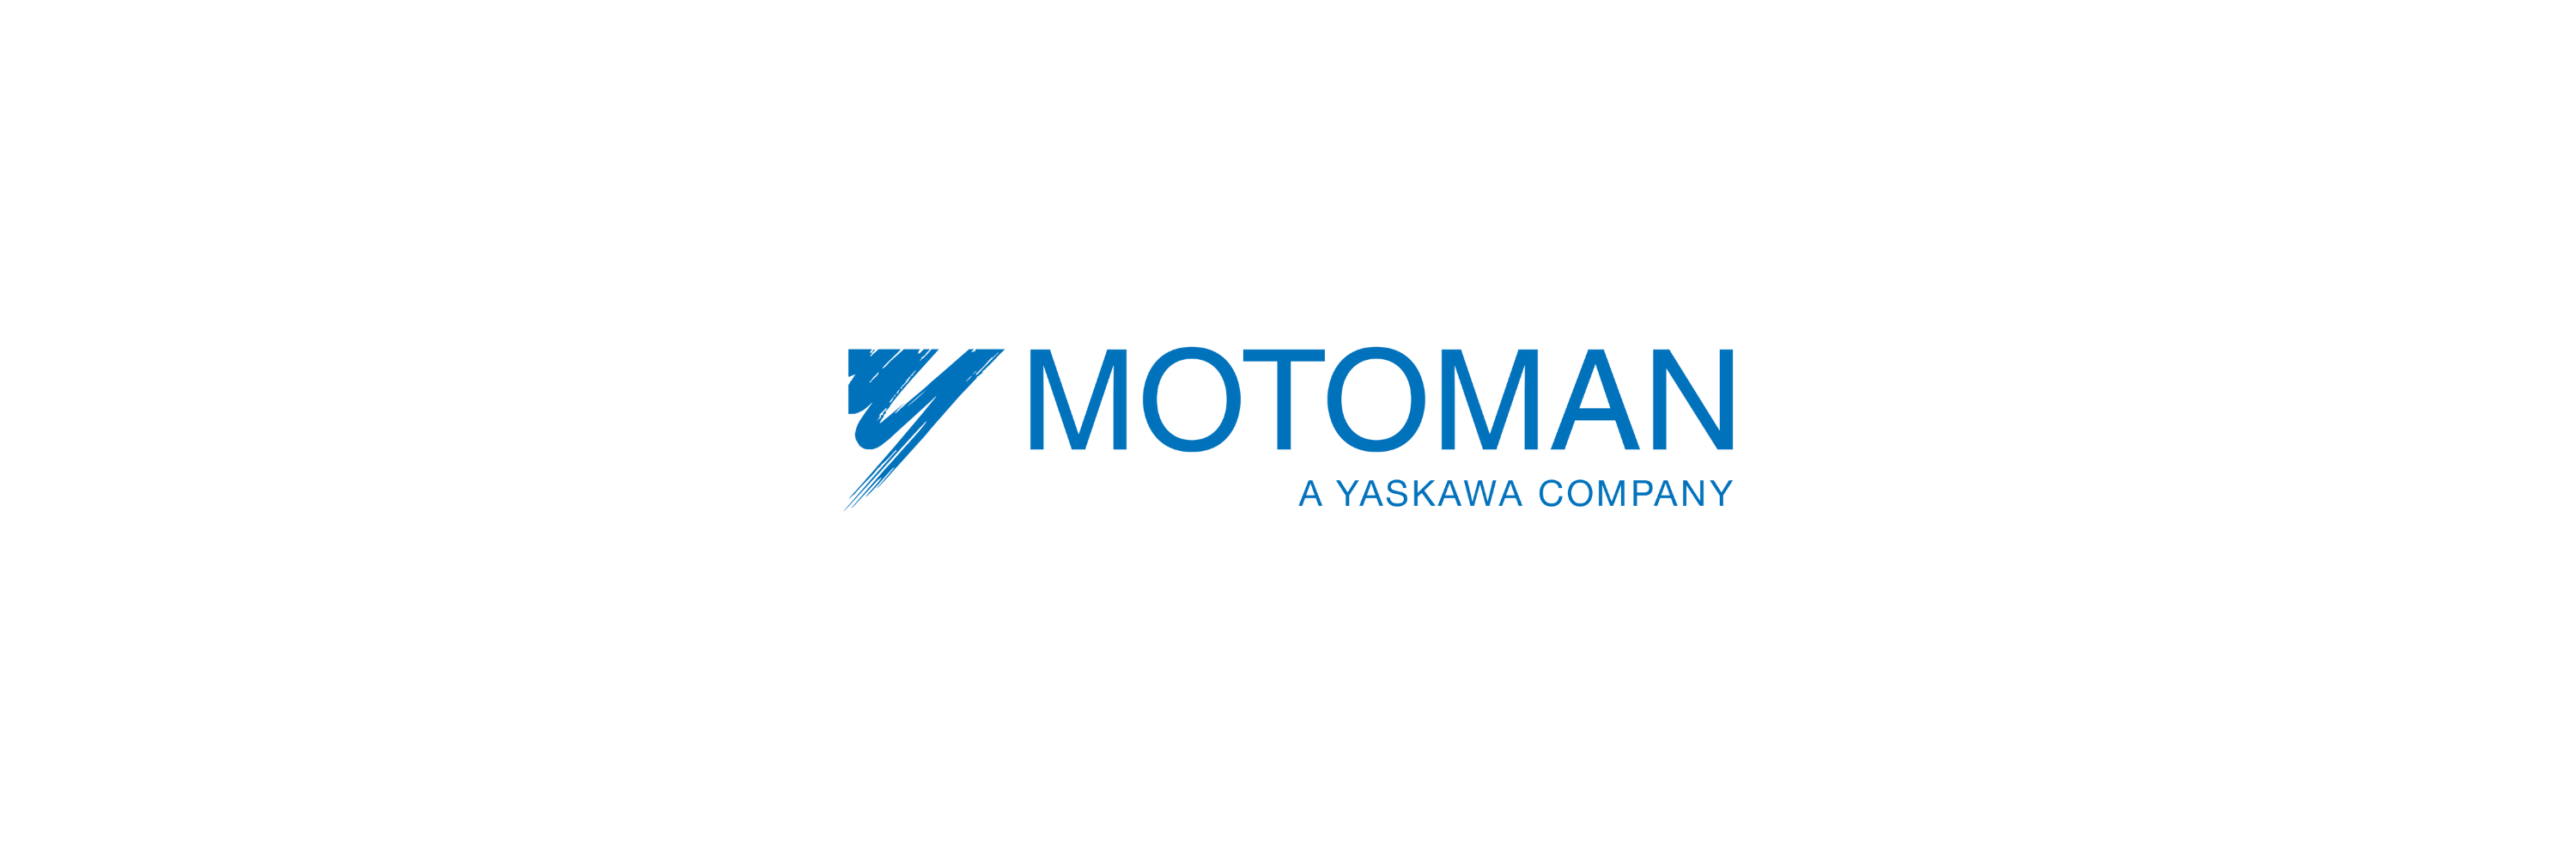 Yaskawa - Motoman - Klenk Maschinenhandel